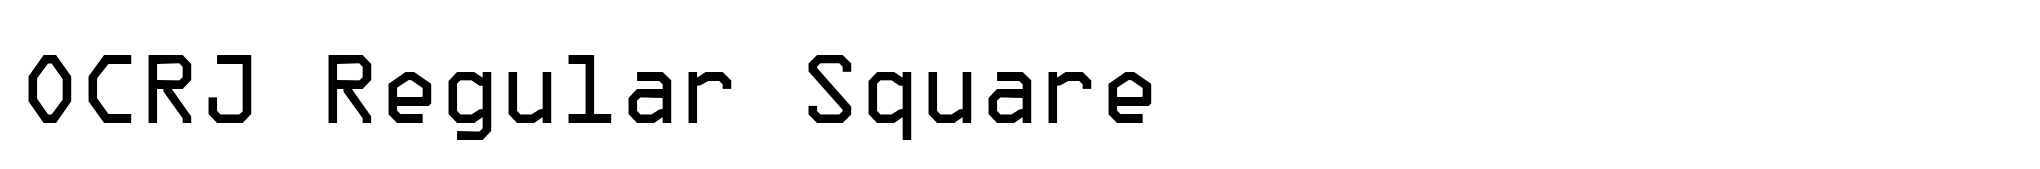 OCRJ Regular Square image